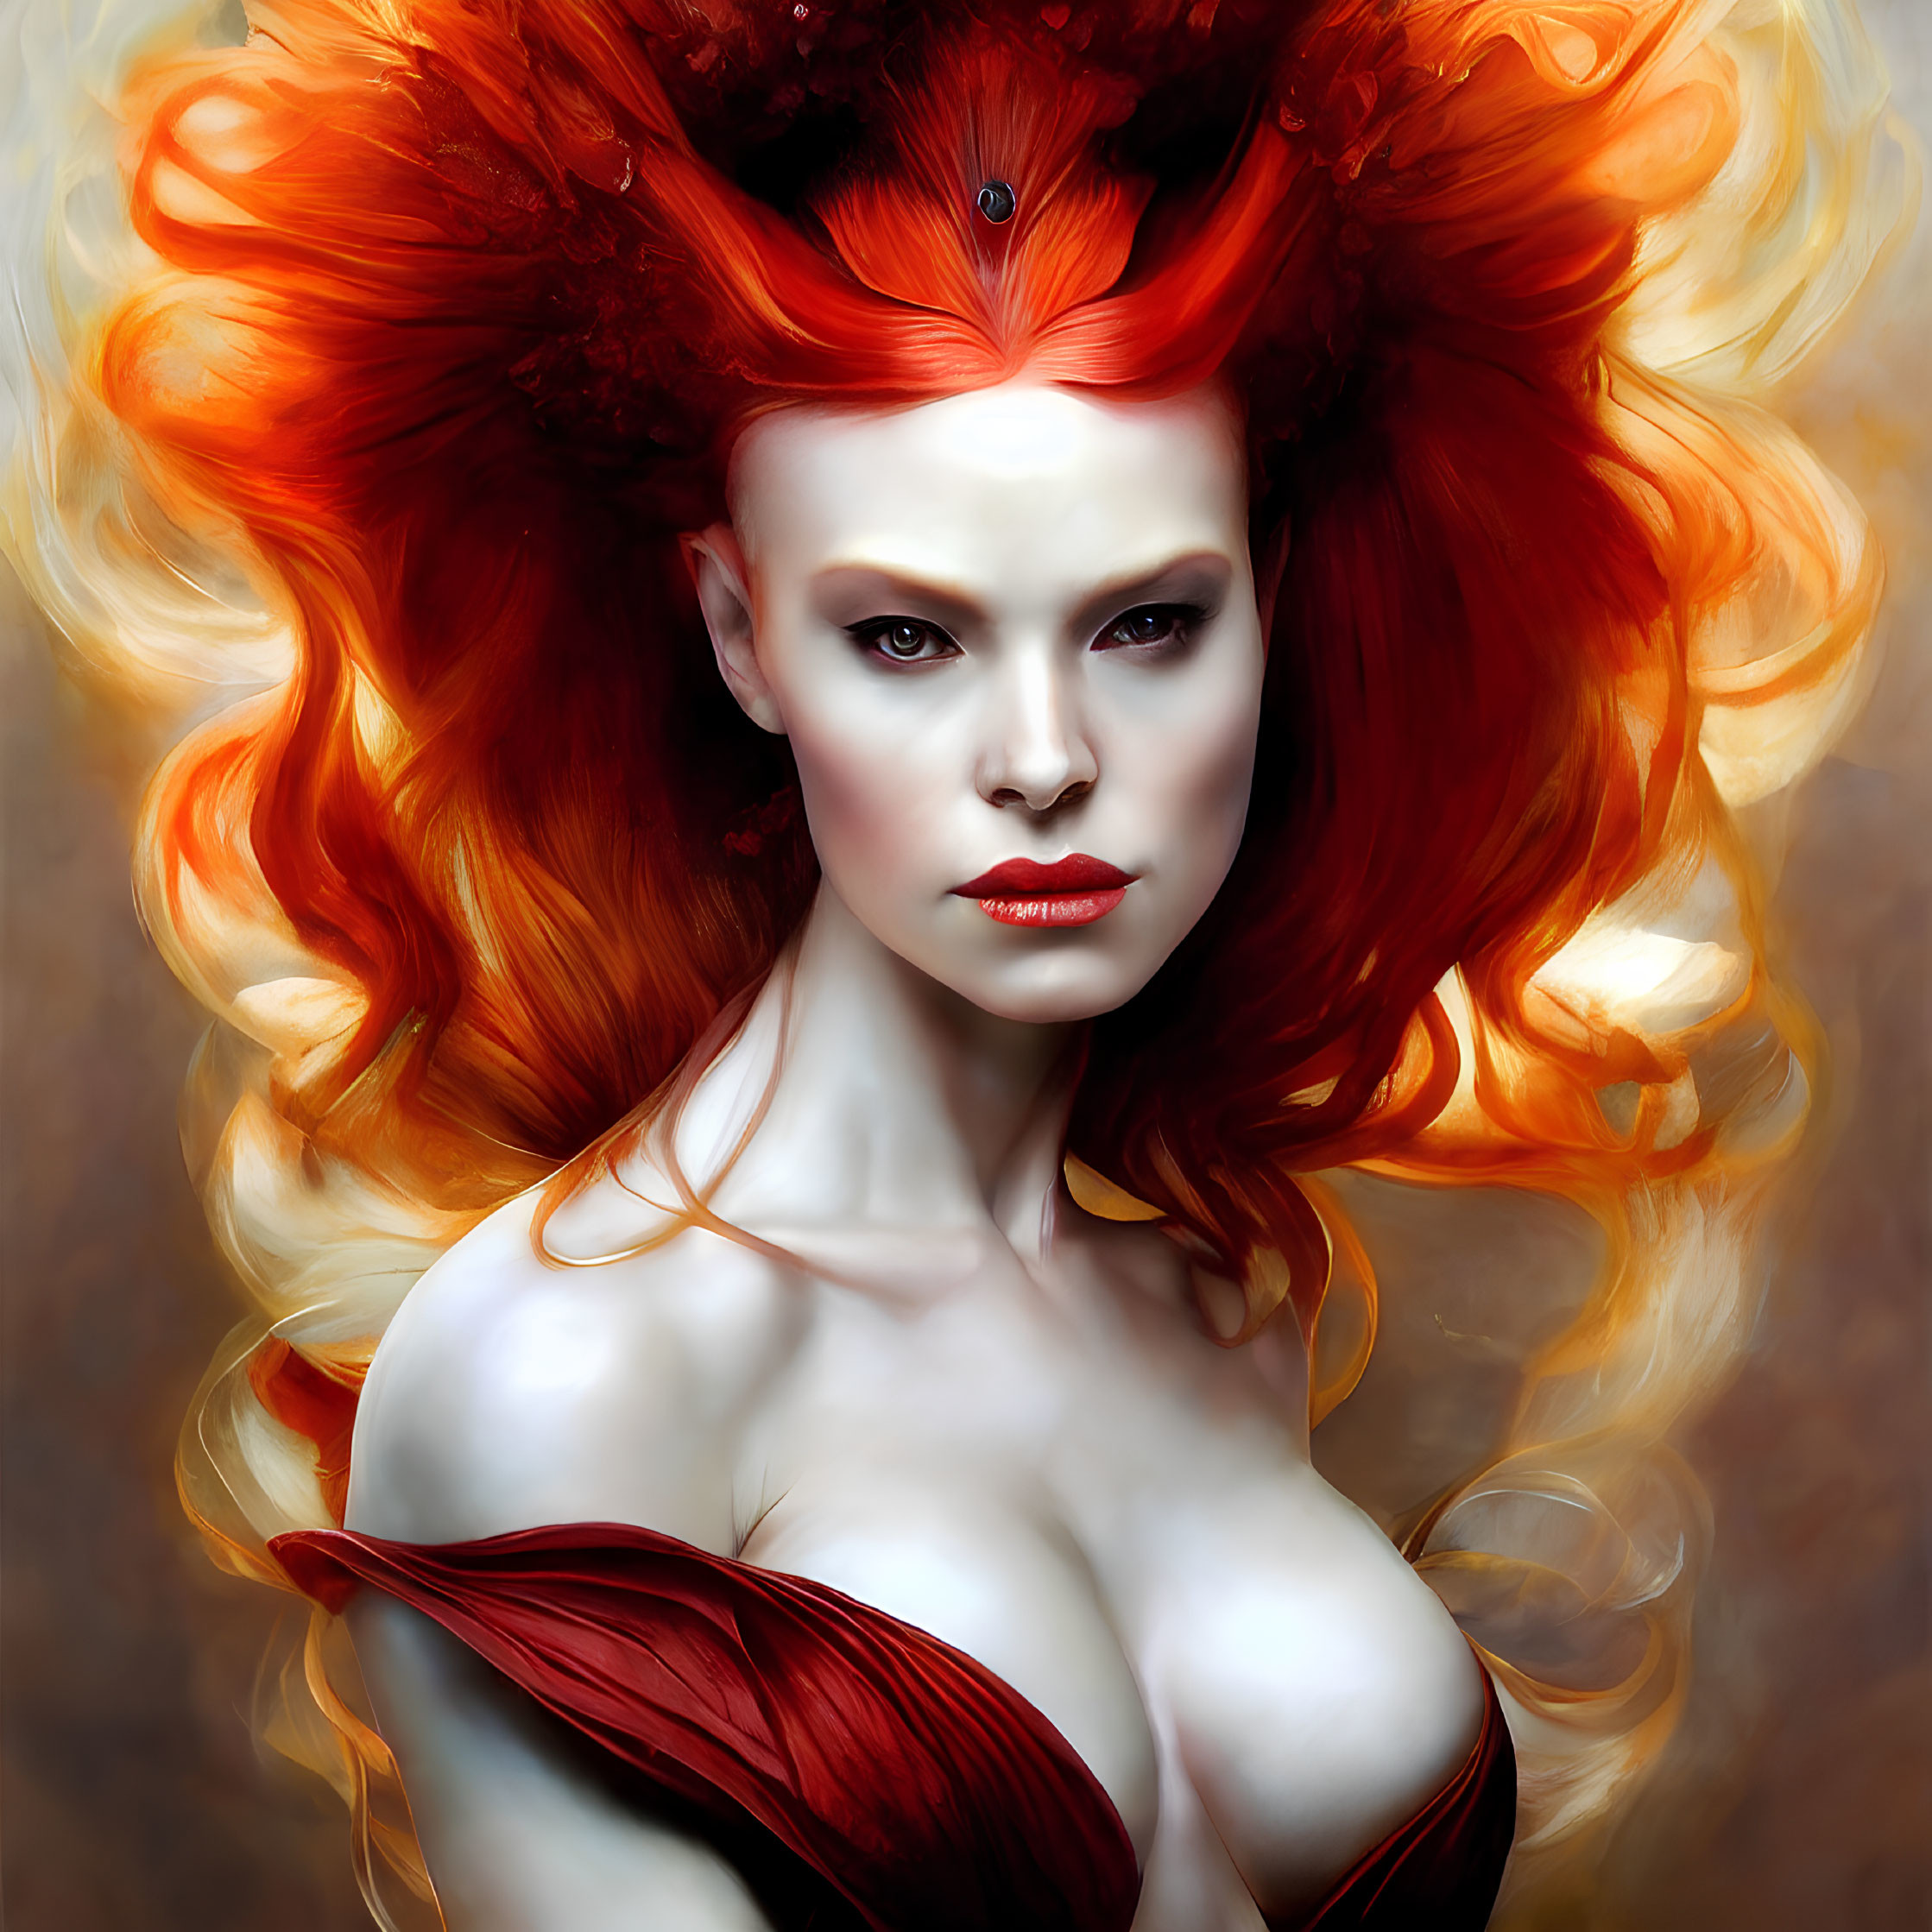 Digital Artwork: Woman with Fiery Orange Hair and Intense Eyes